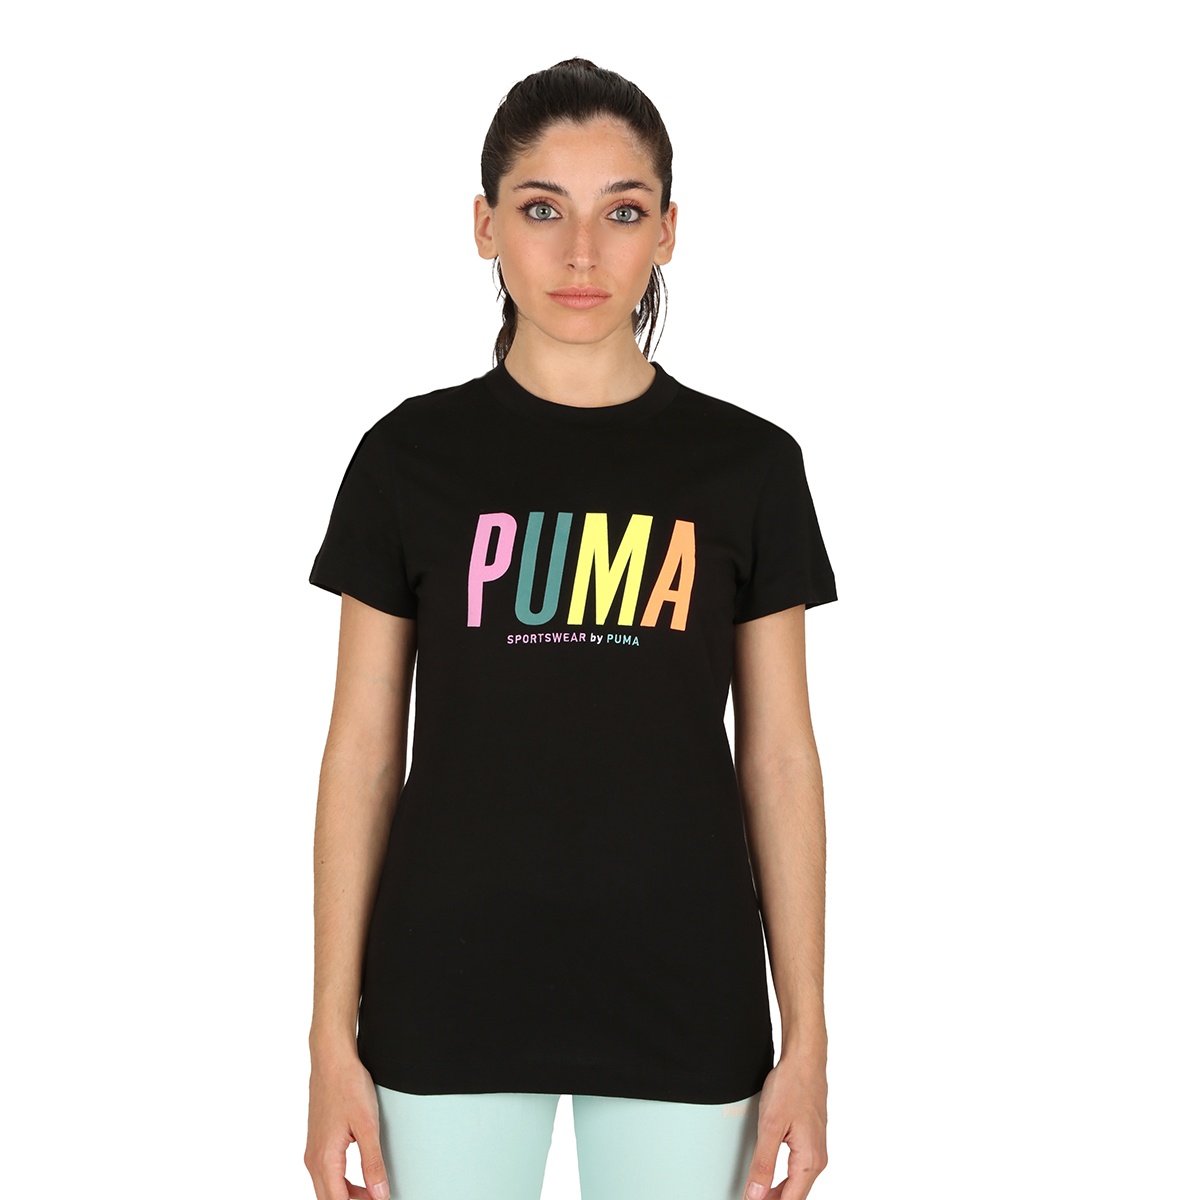 Remera Puma Sportswear Graphic,  image number null